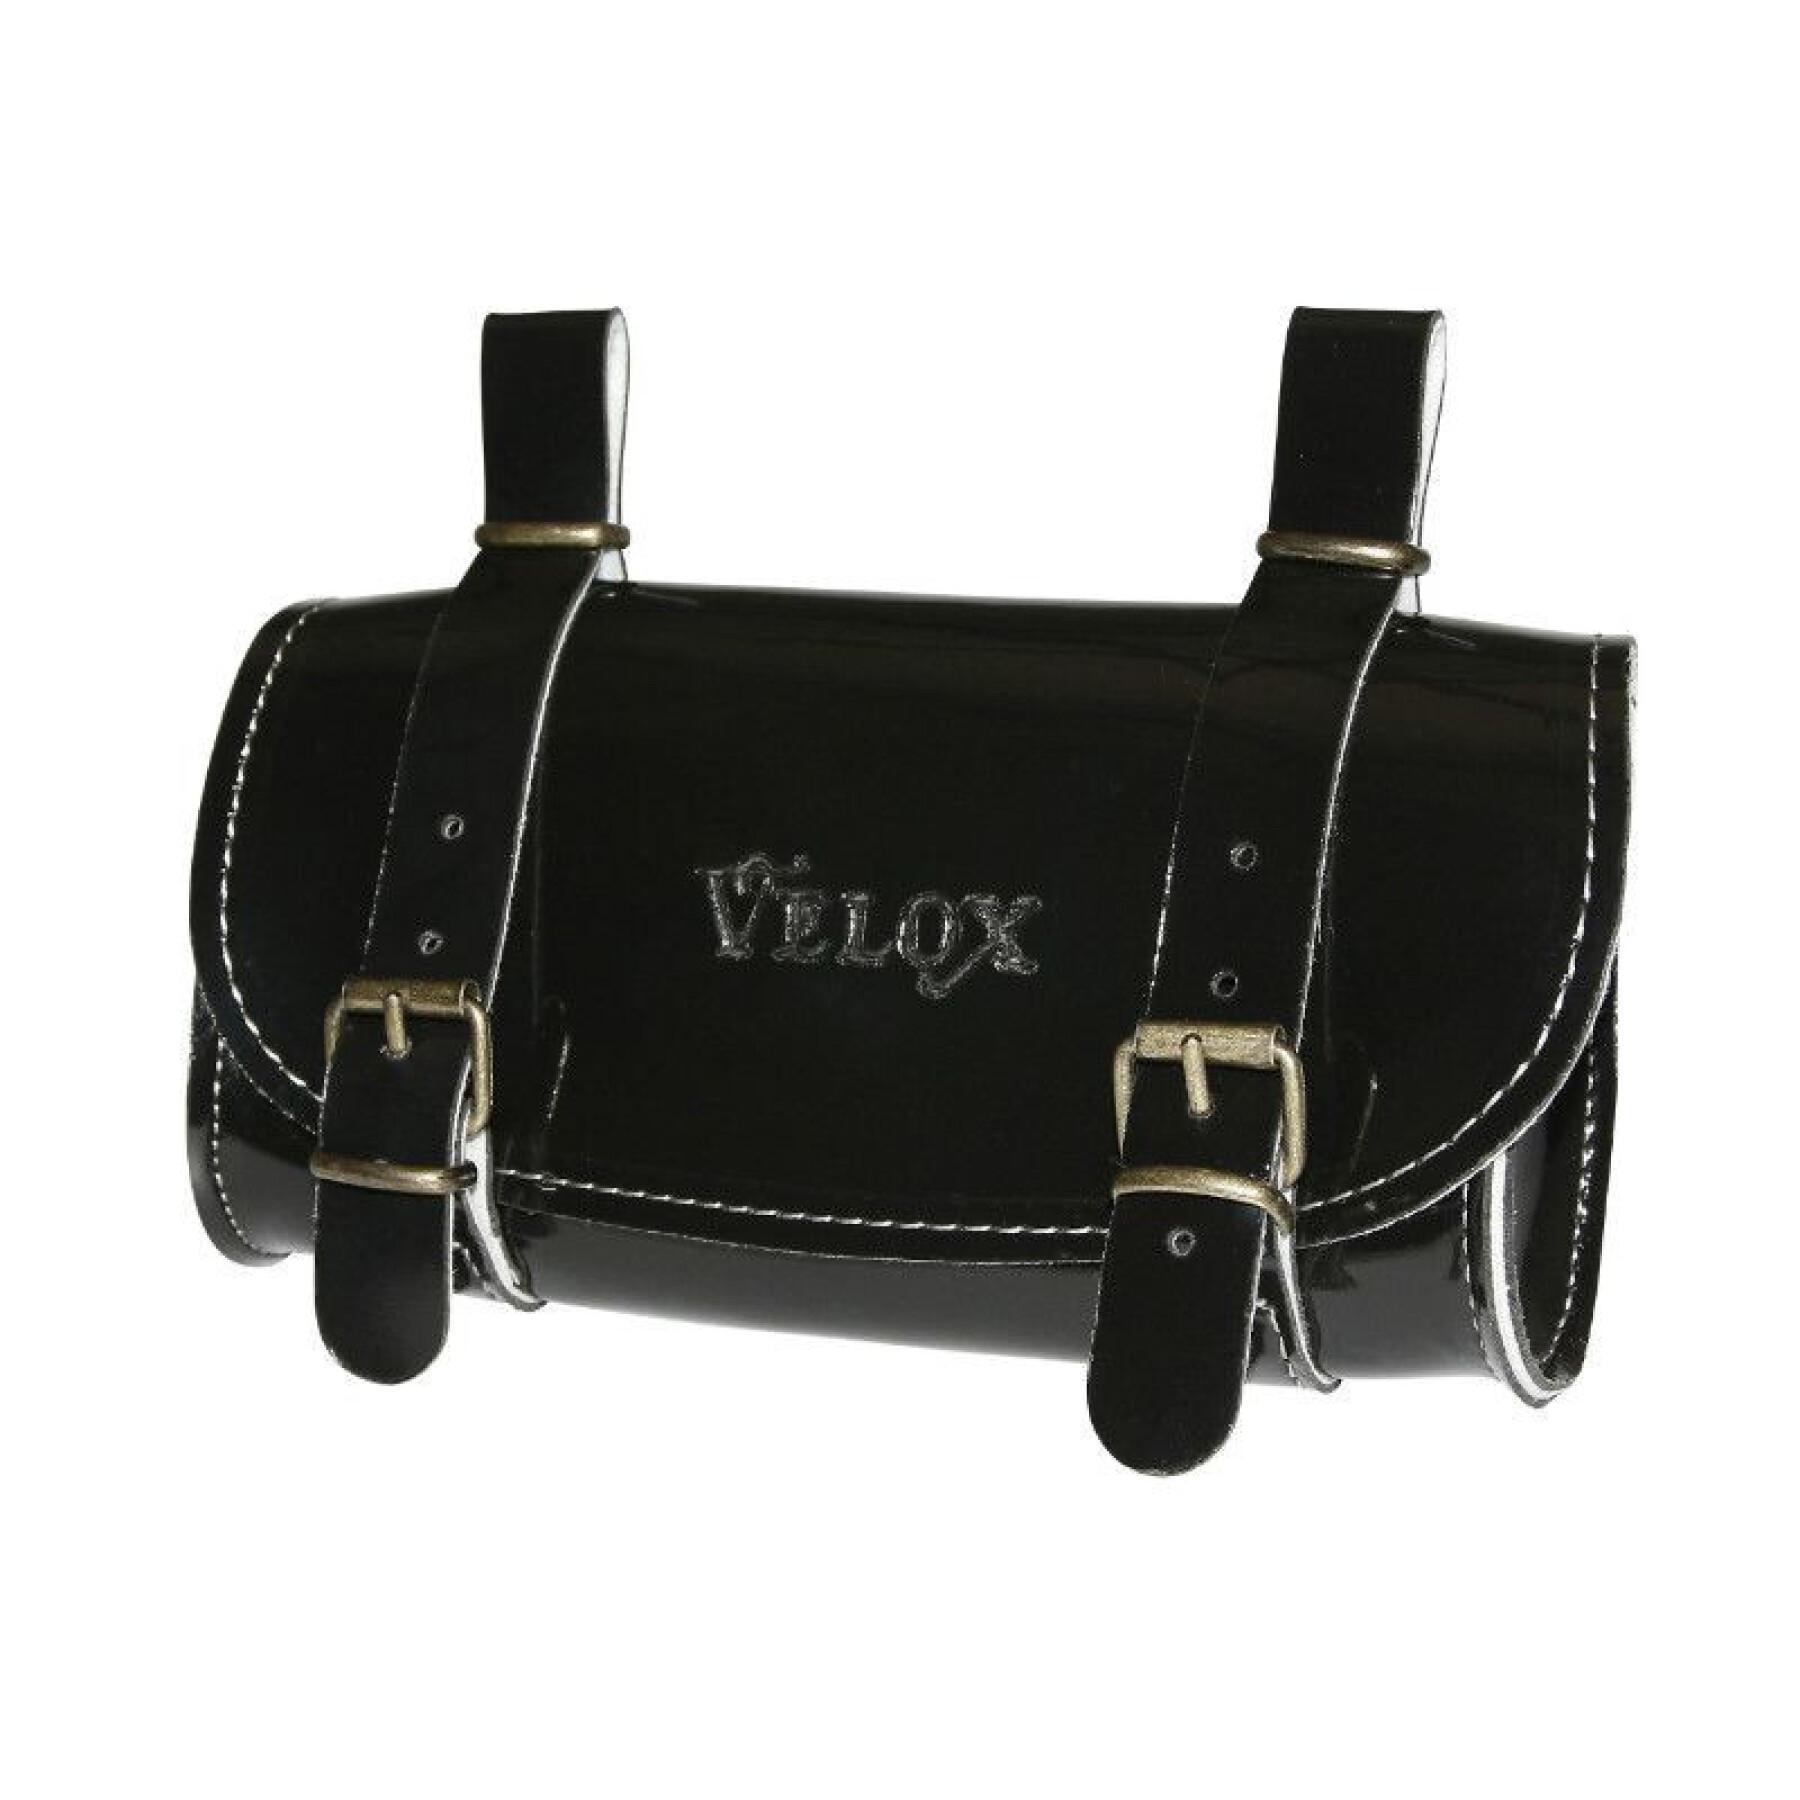 Leatherette bike saddle bag Velox 78 g